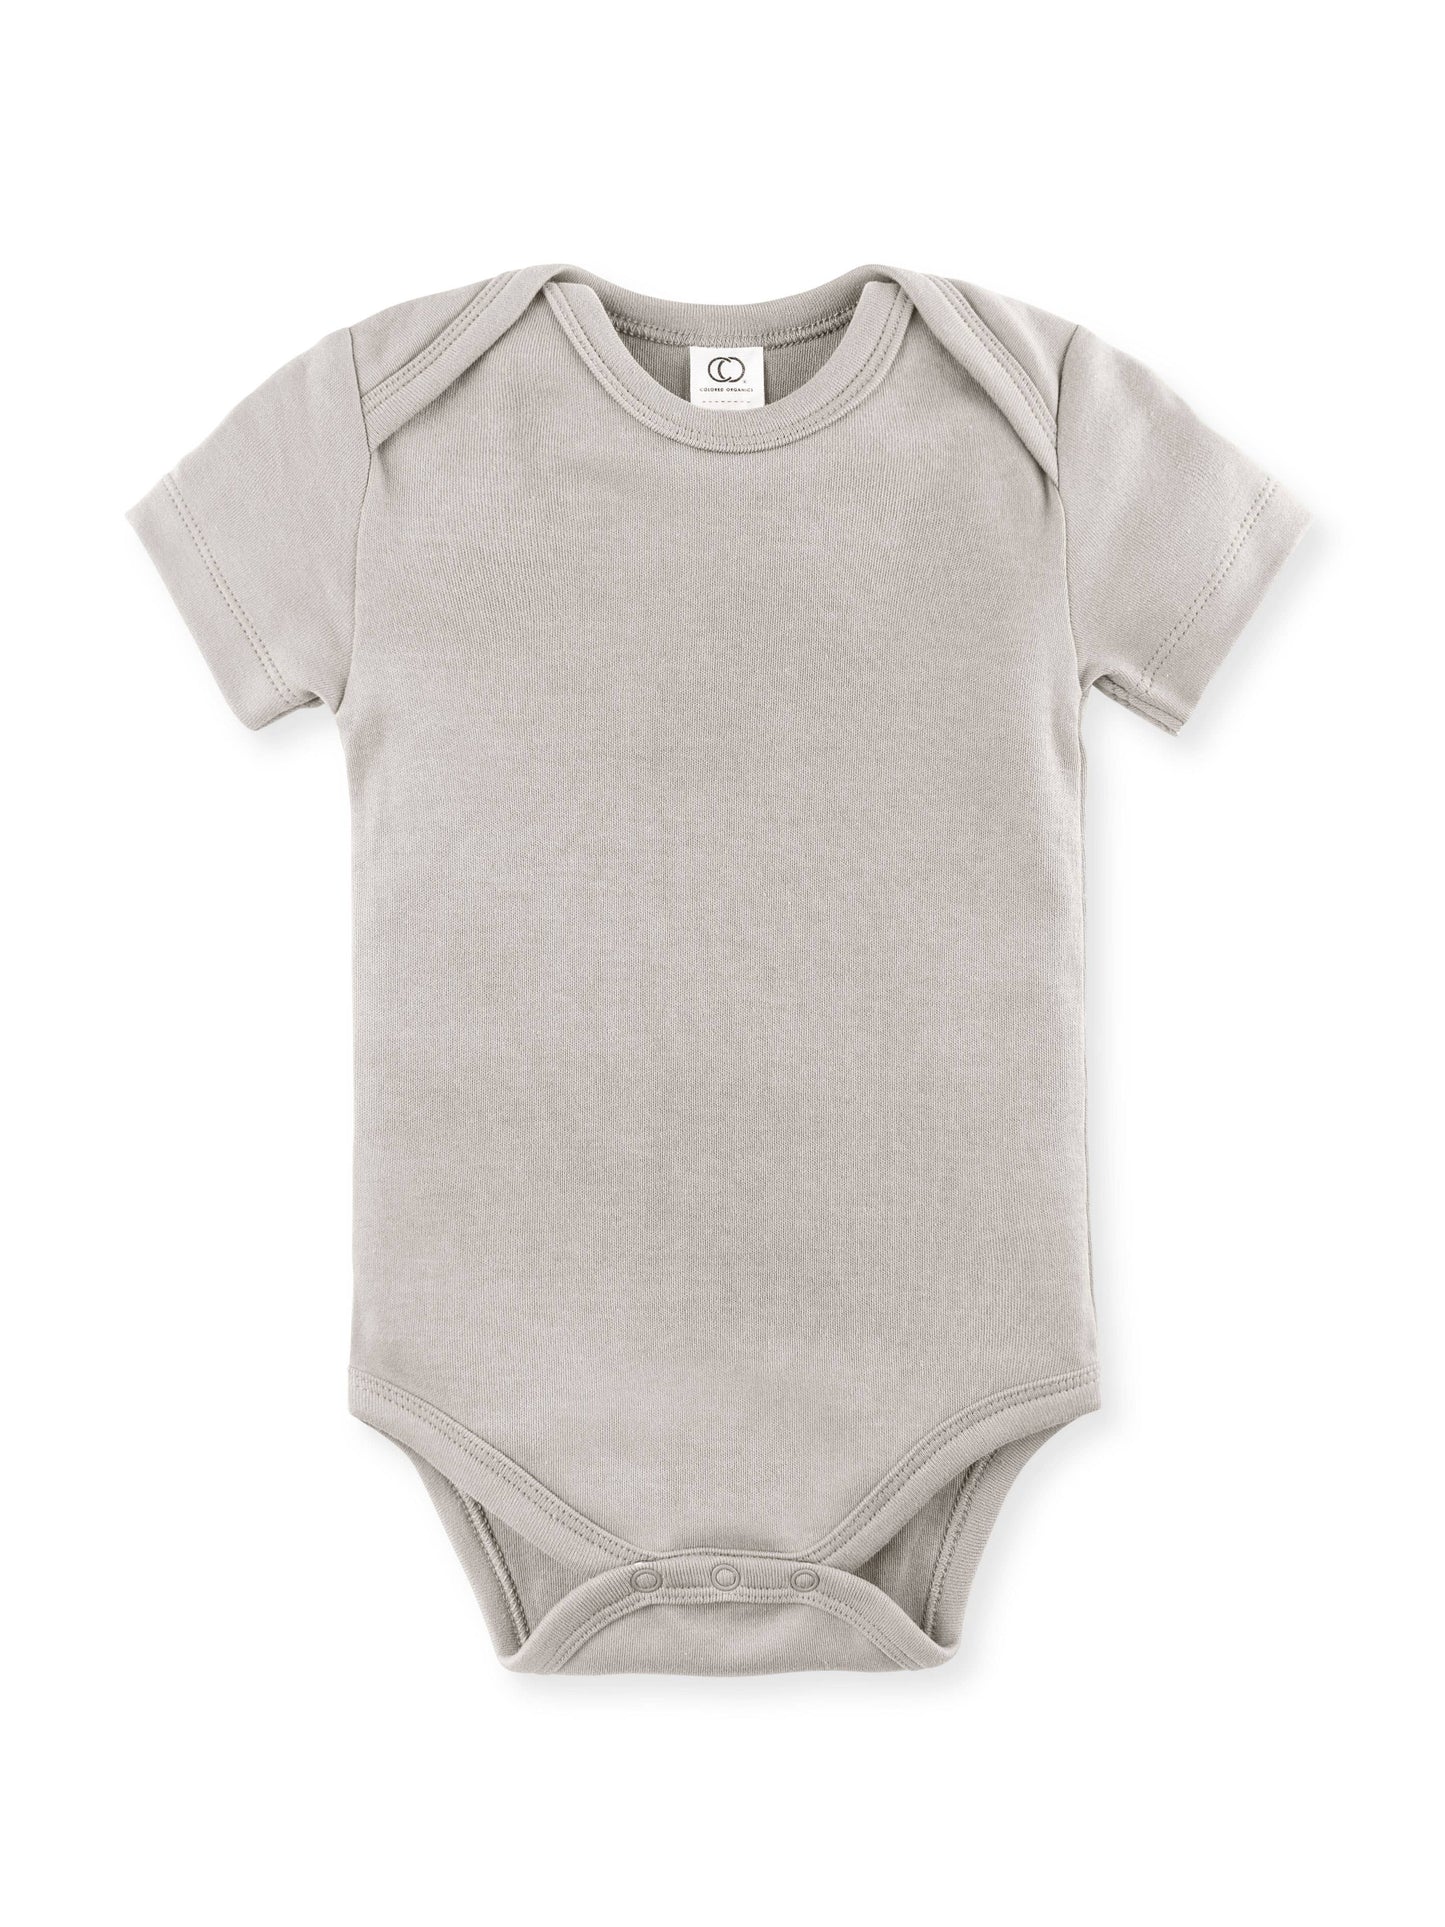 Colored Organics - Organic Baby Short Sleeve Classic Bodysuit - Stone: 0-3M